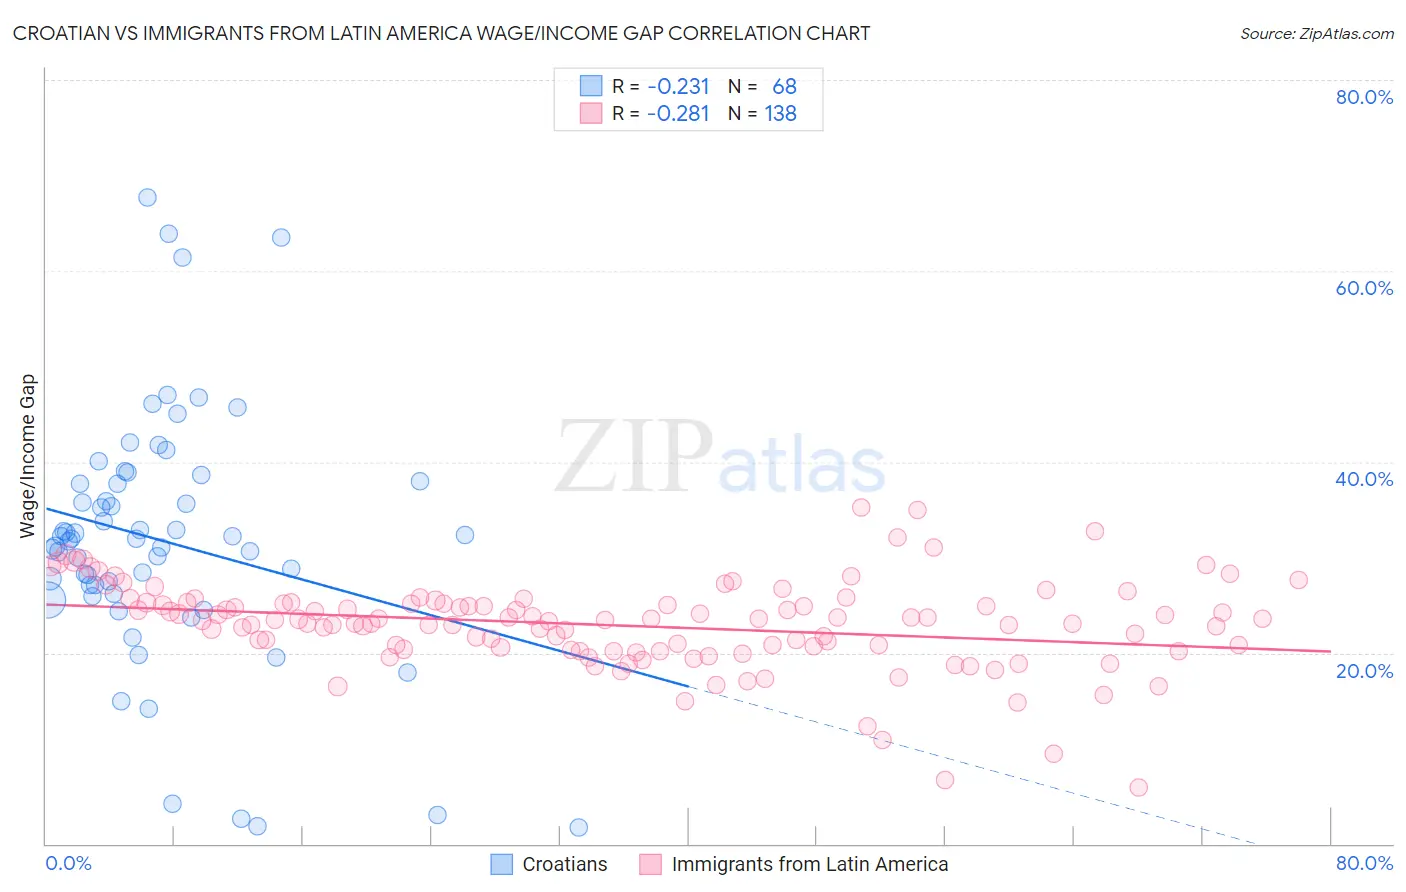 Croatian vs Immigrants from Latin America Wage/Income Gap